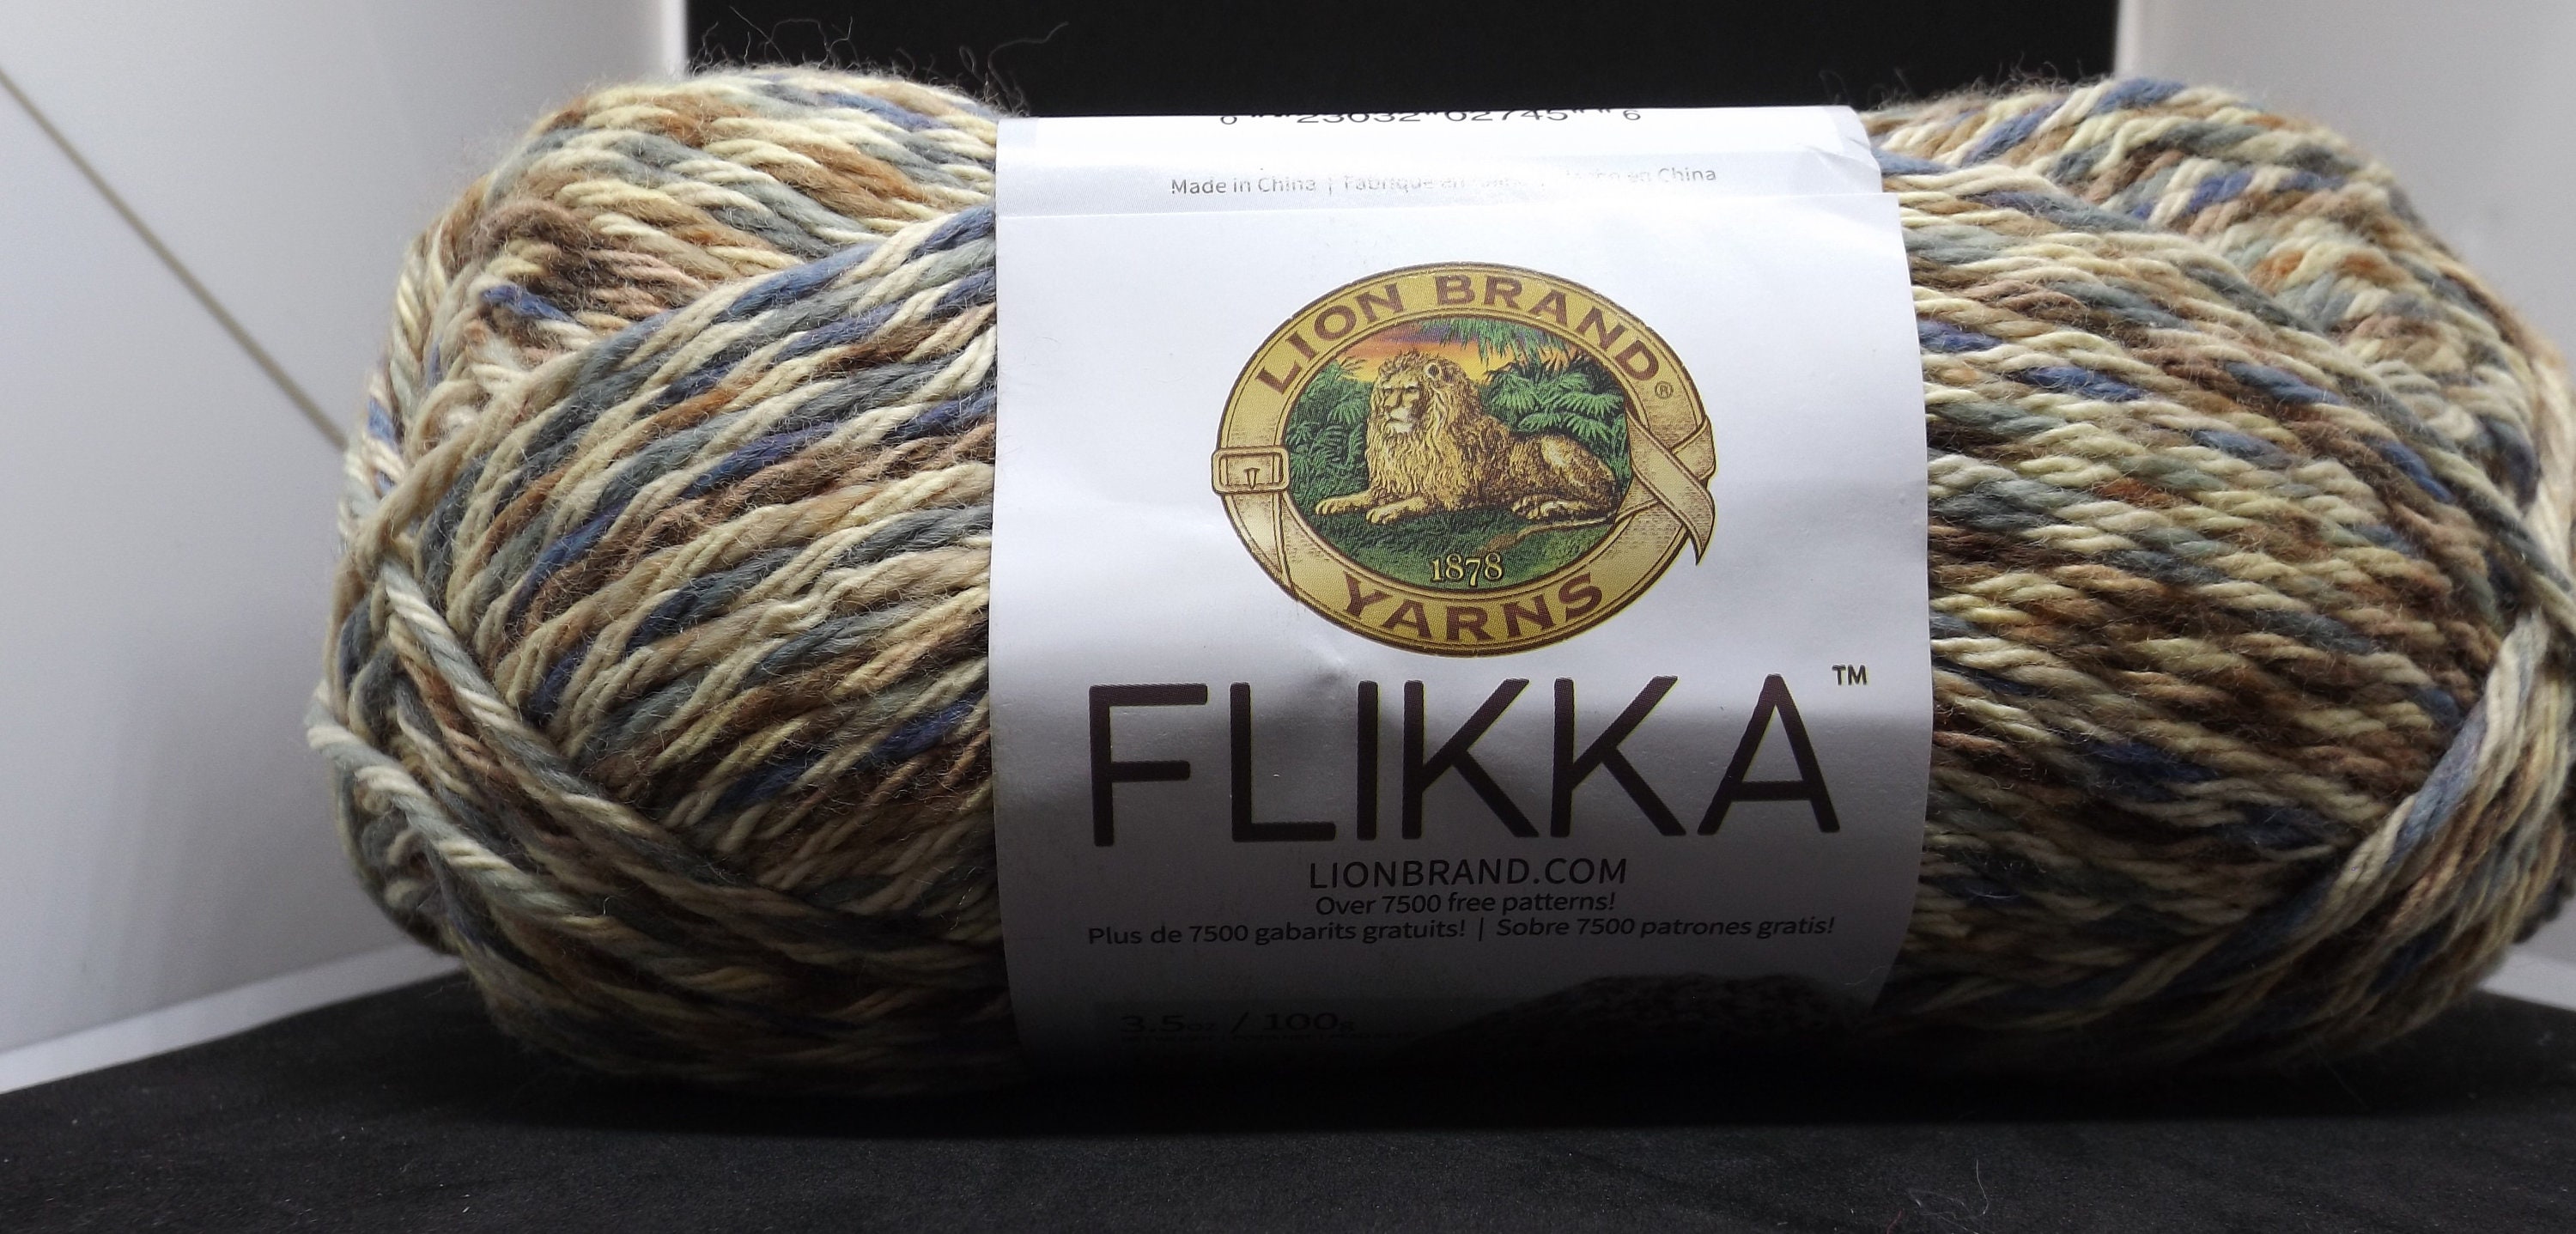 Lion Brand Flikka Yarn 712 Keepsake 3.5 Oz/100 Grams 196 Yards/179 Meters 3  Light knitting, Crochet 